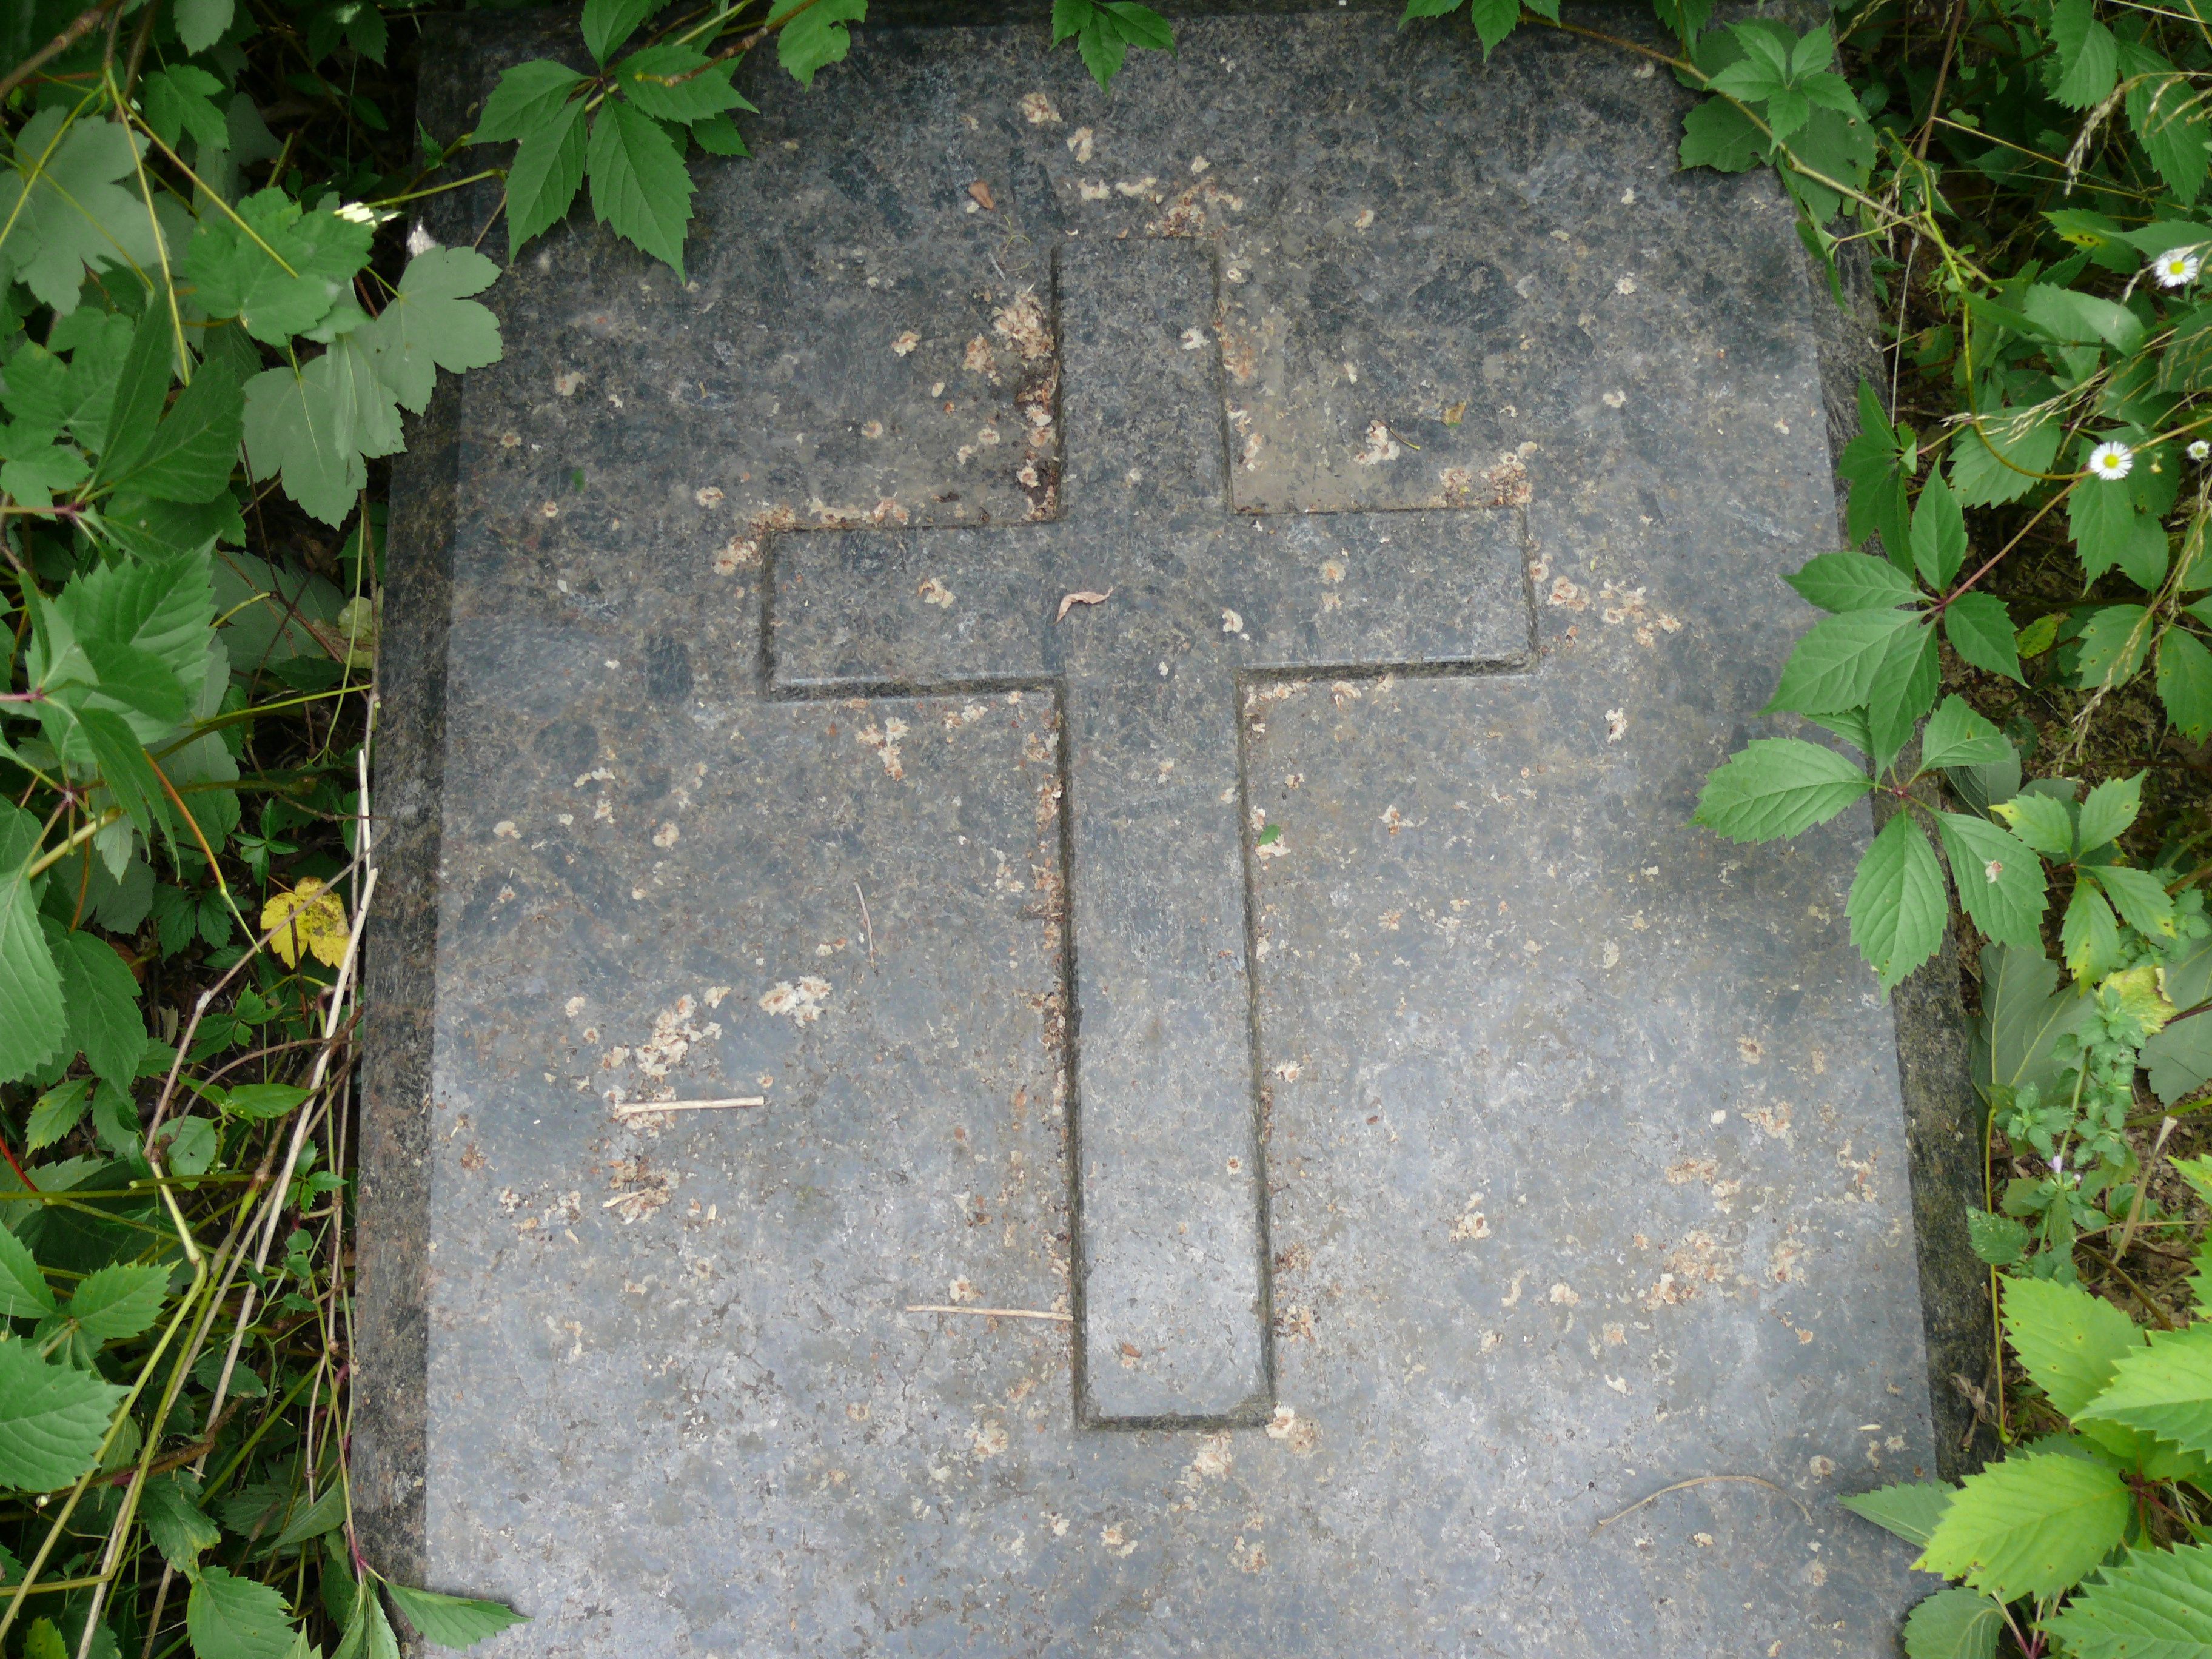 Tombstone of Balthazara Pruszyńska